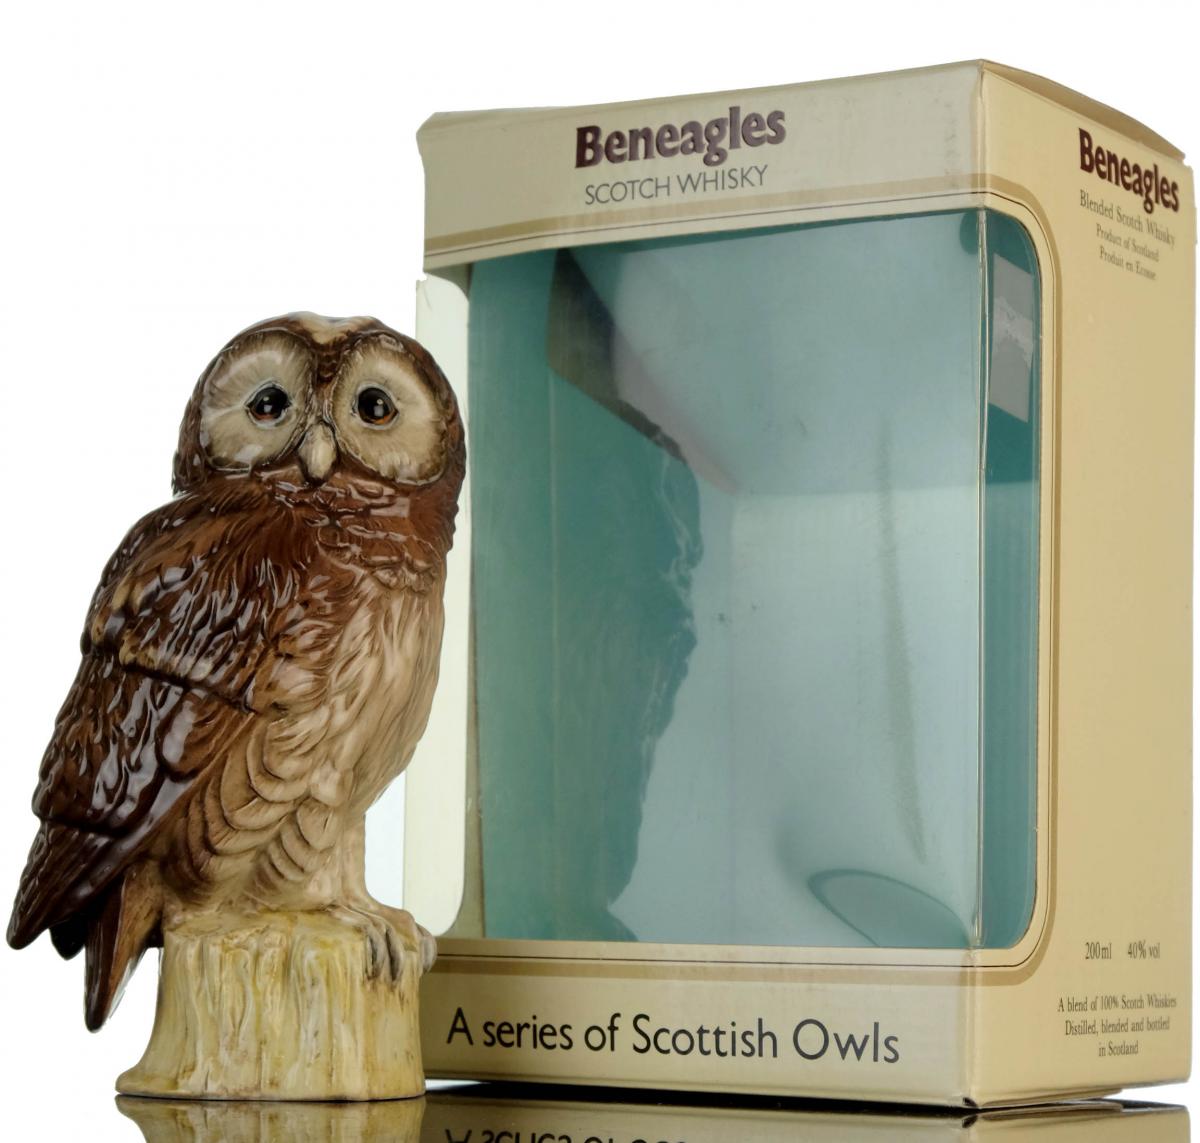 Beneagles Tawny Owl